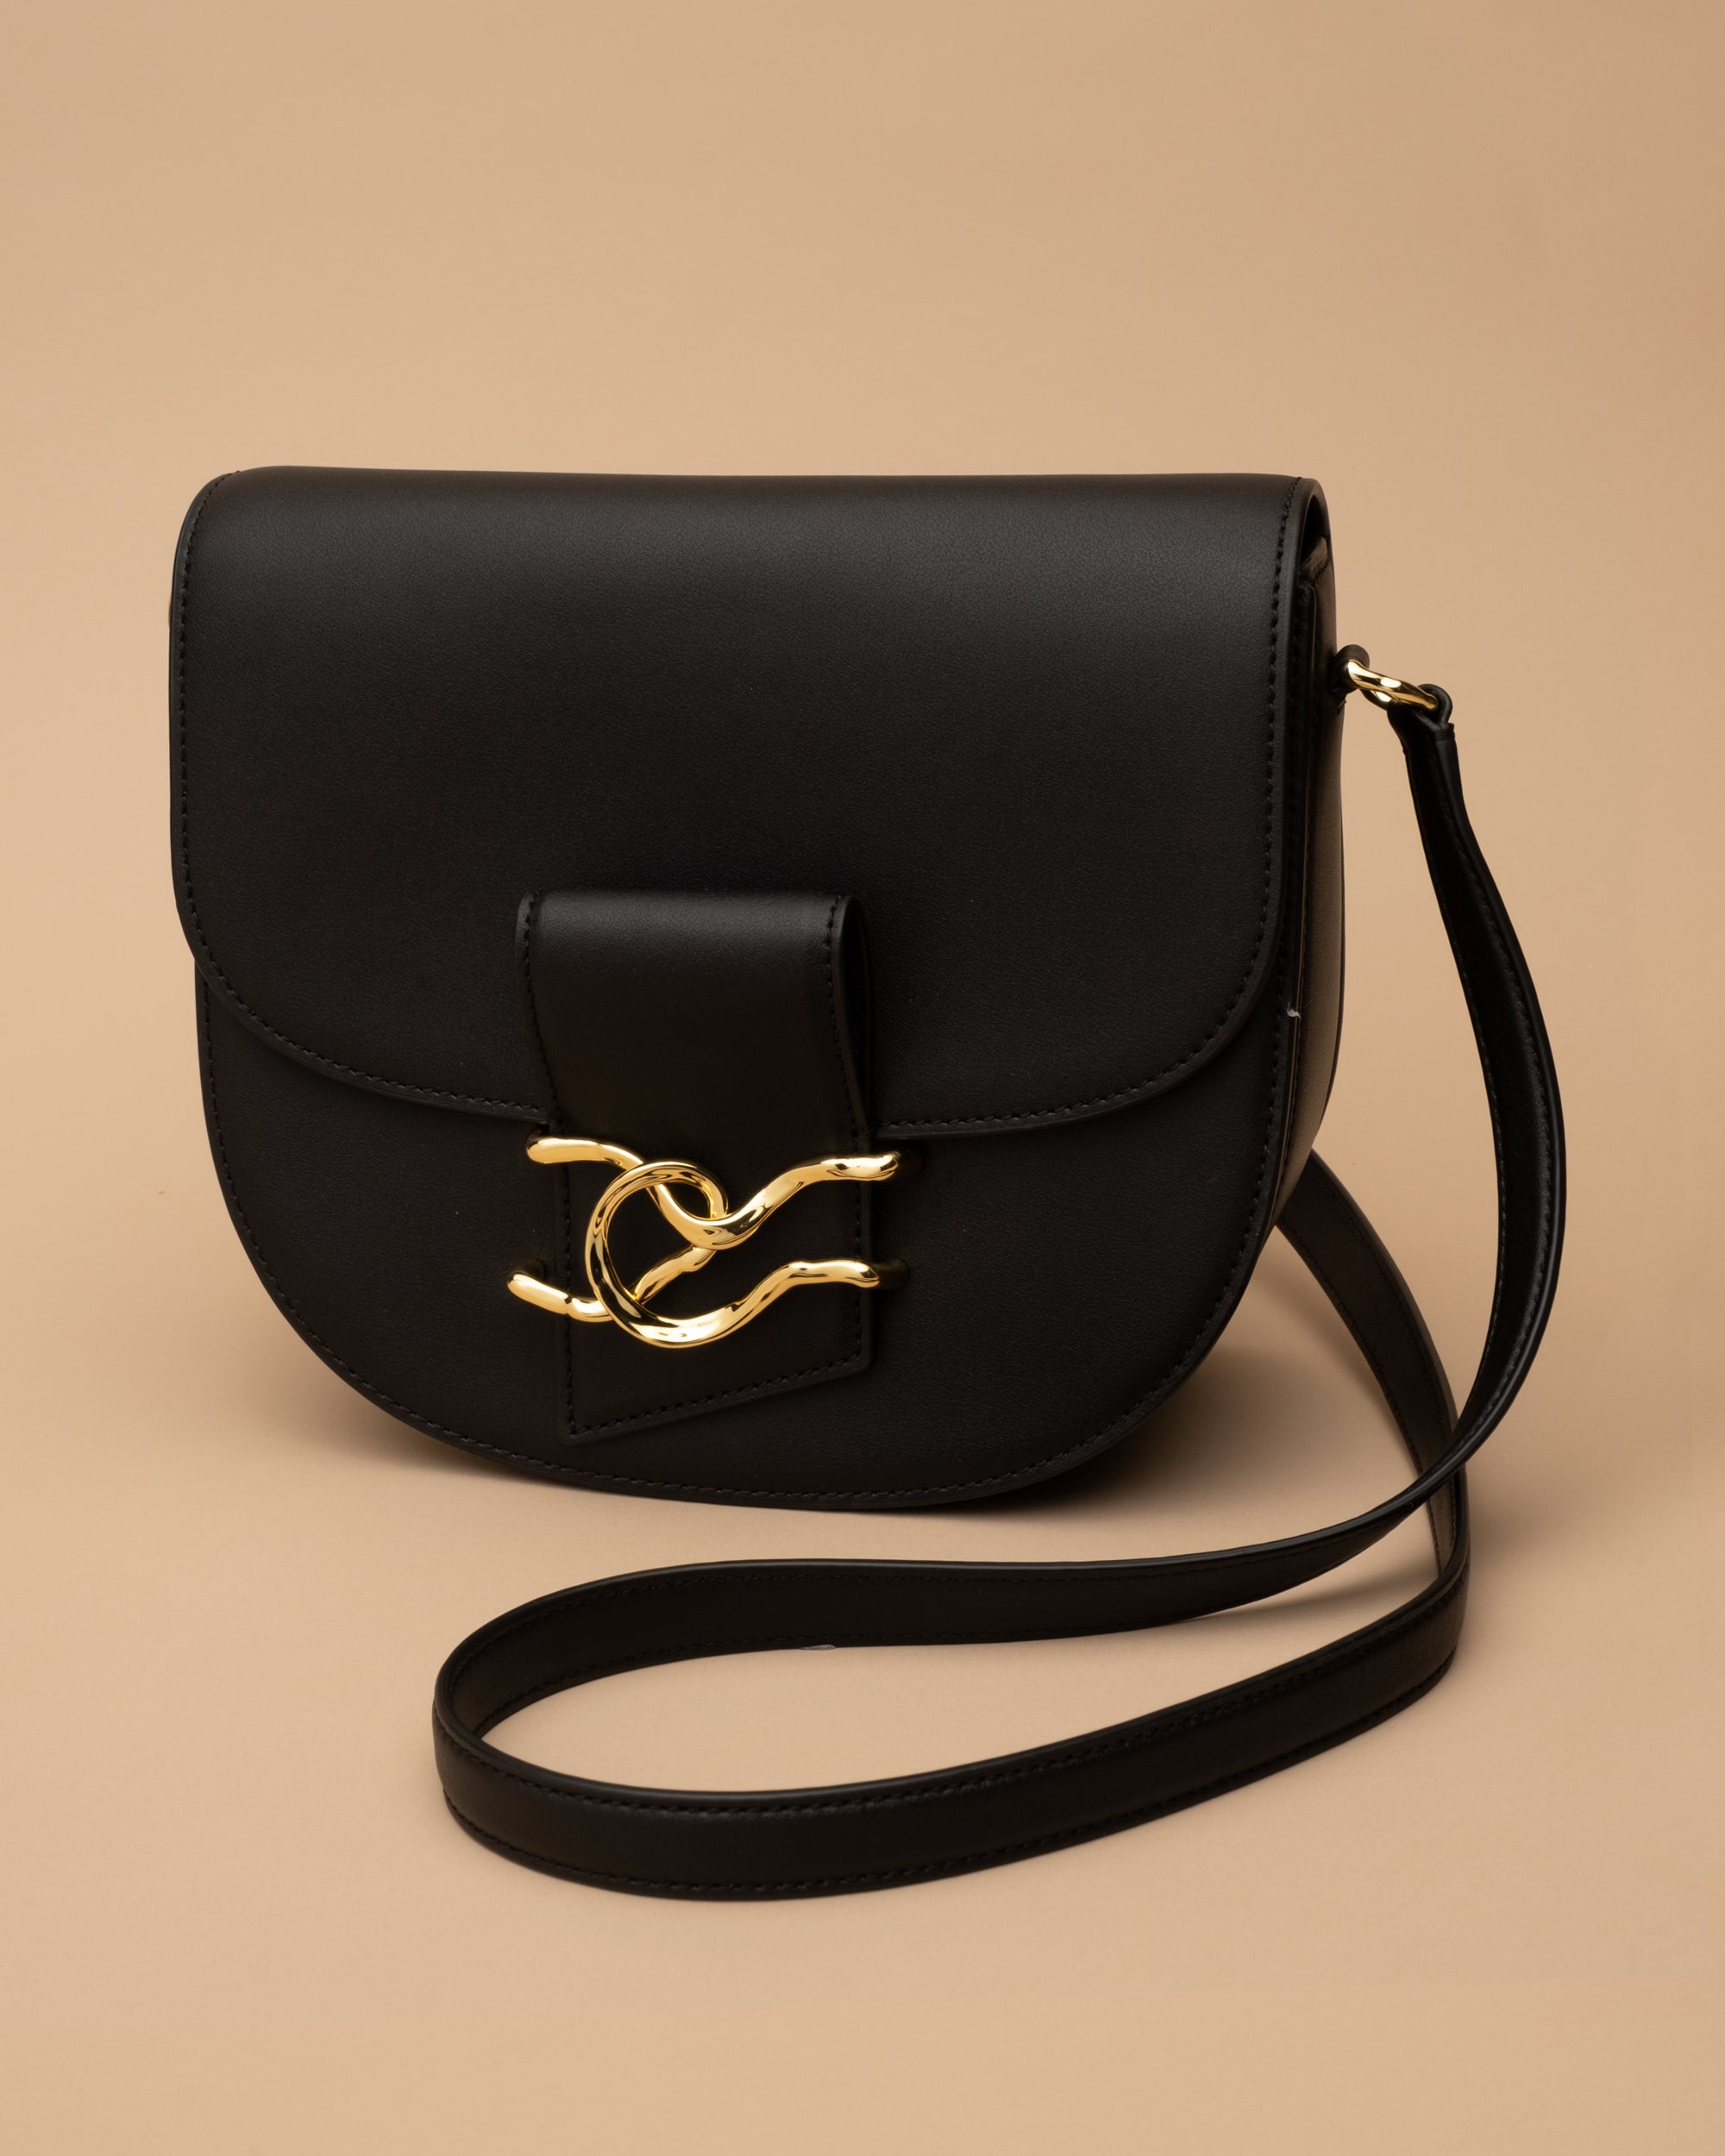 Twisted Gold Black Leather Saddle Bag – ALEXIS BITTAR